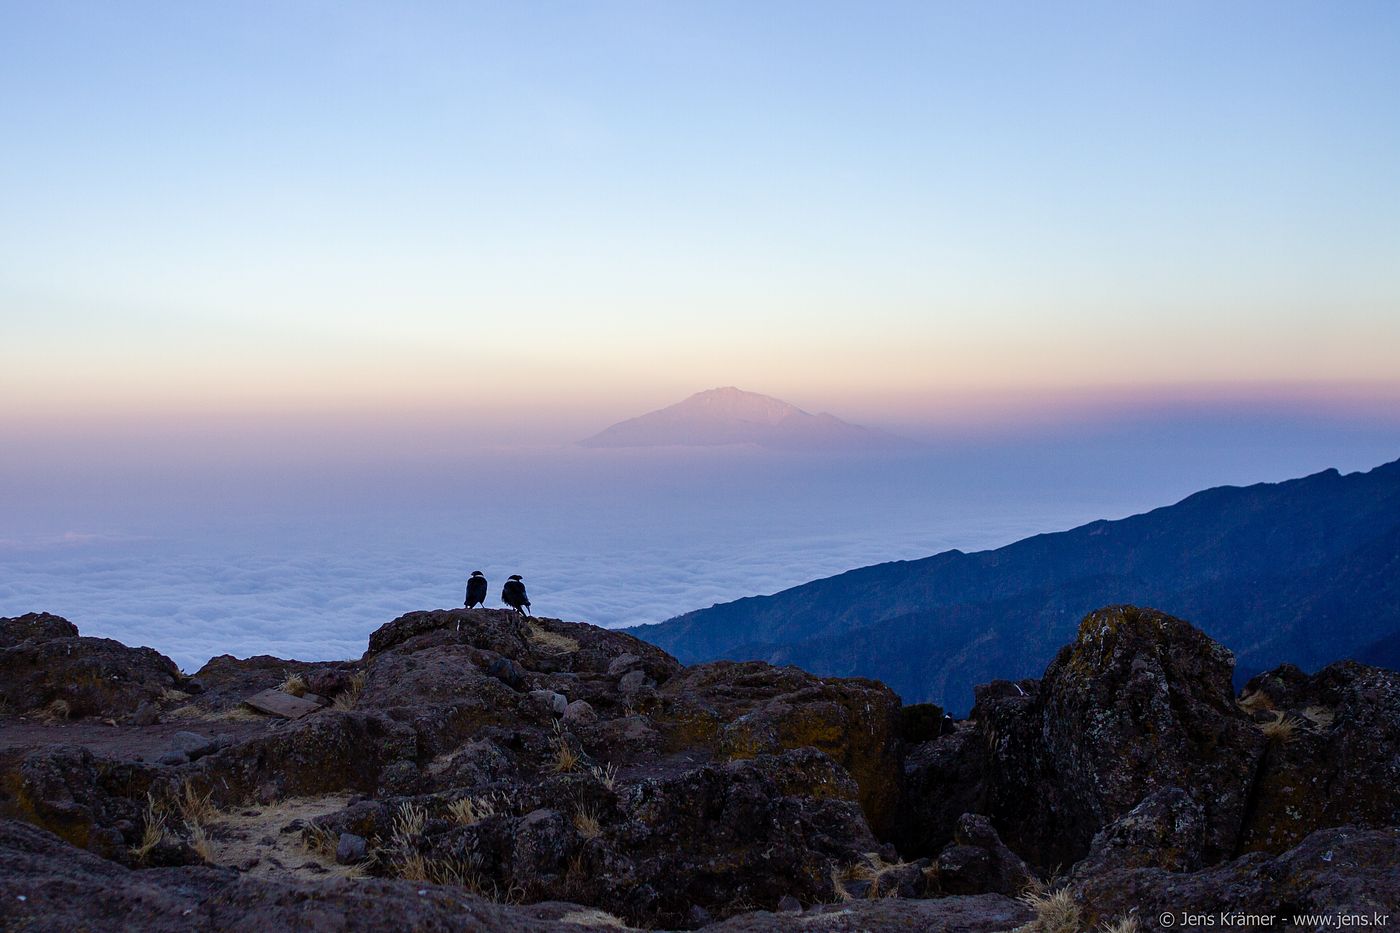 Mt. Meru as Seen From Shira Camp